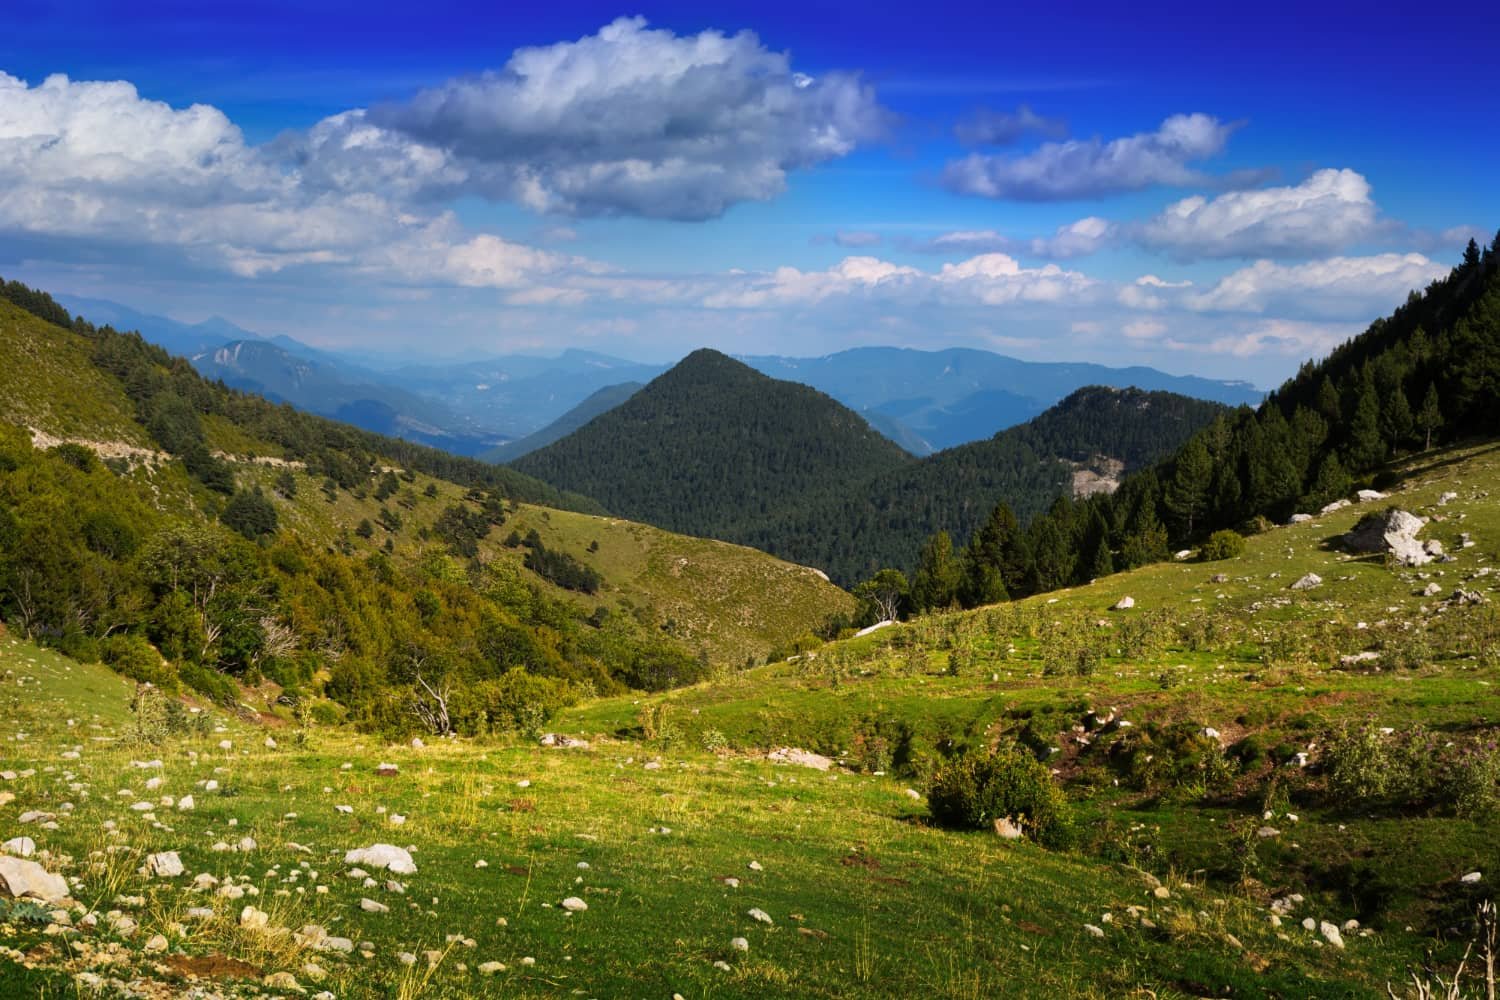 UNESCO World Heritage sites in Bulgaria